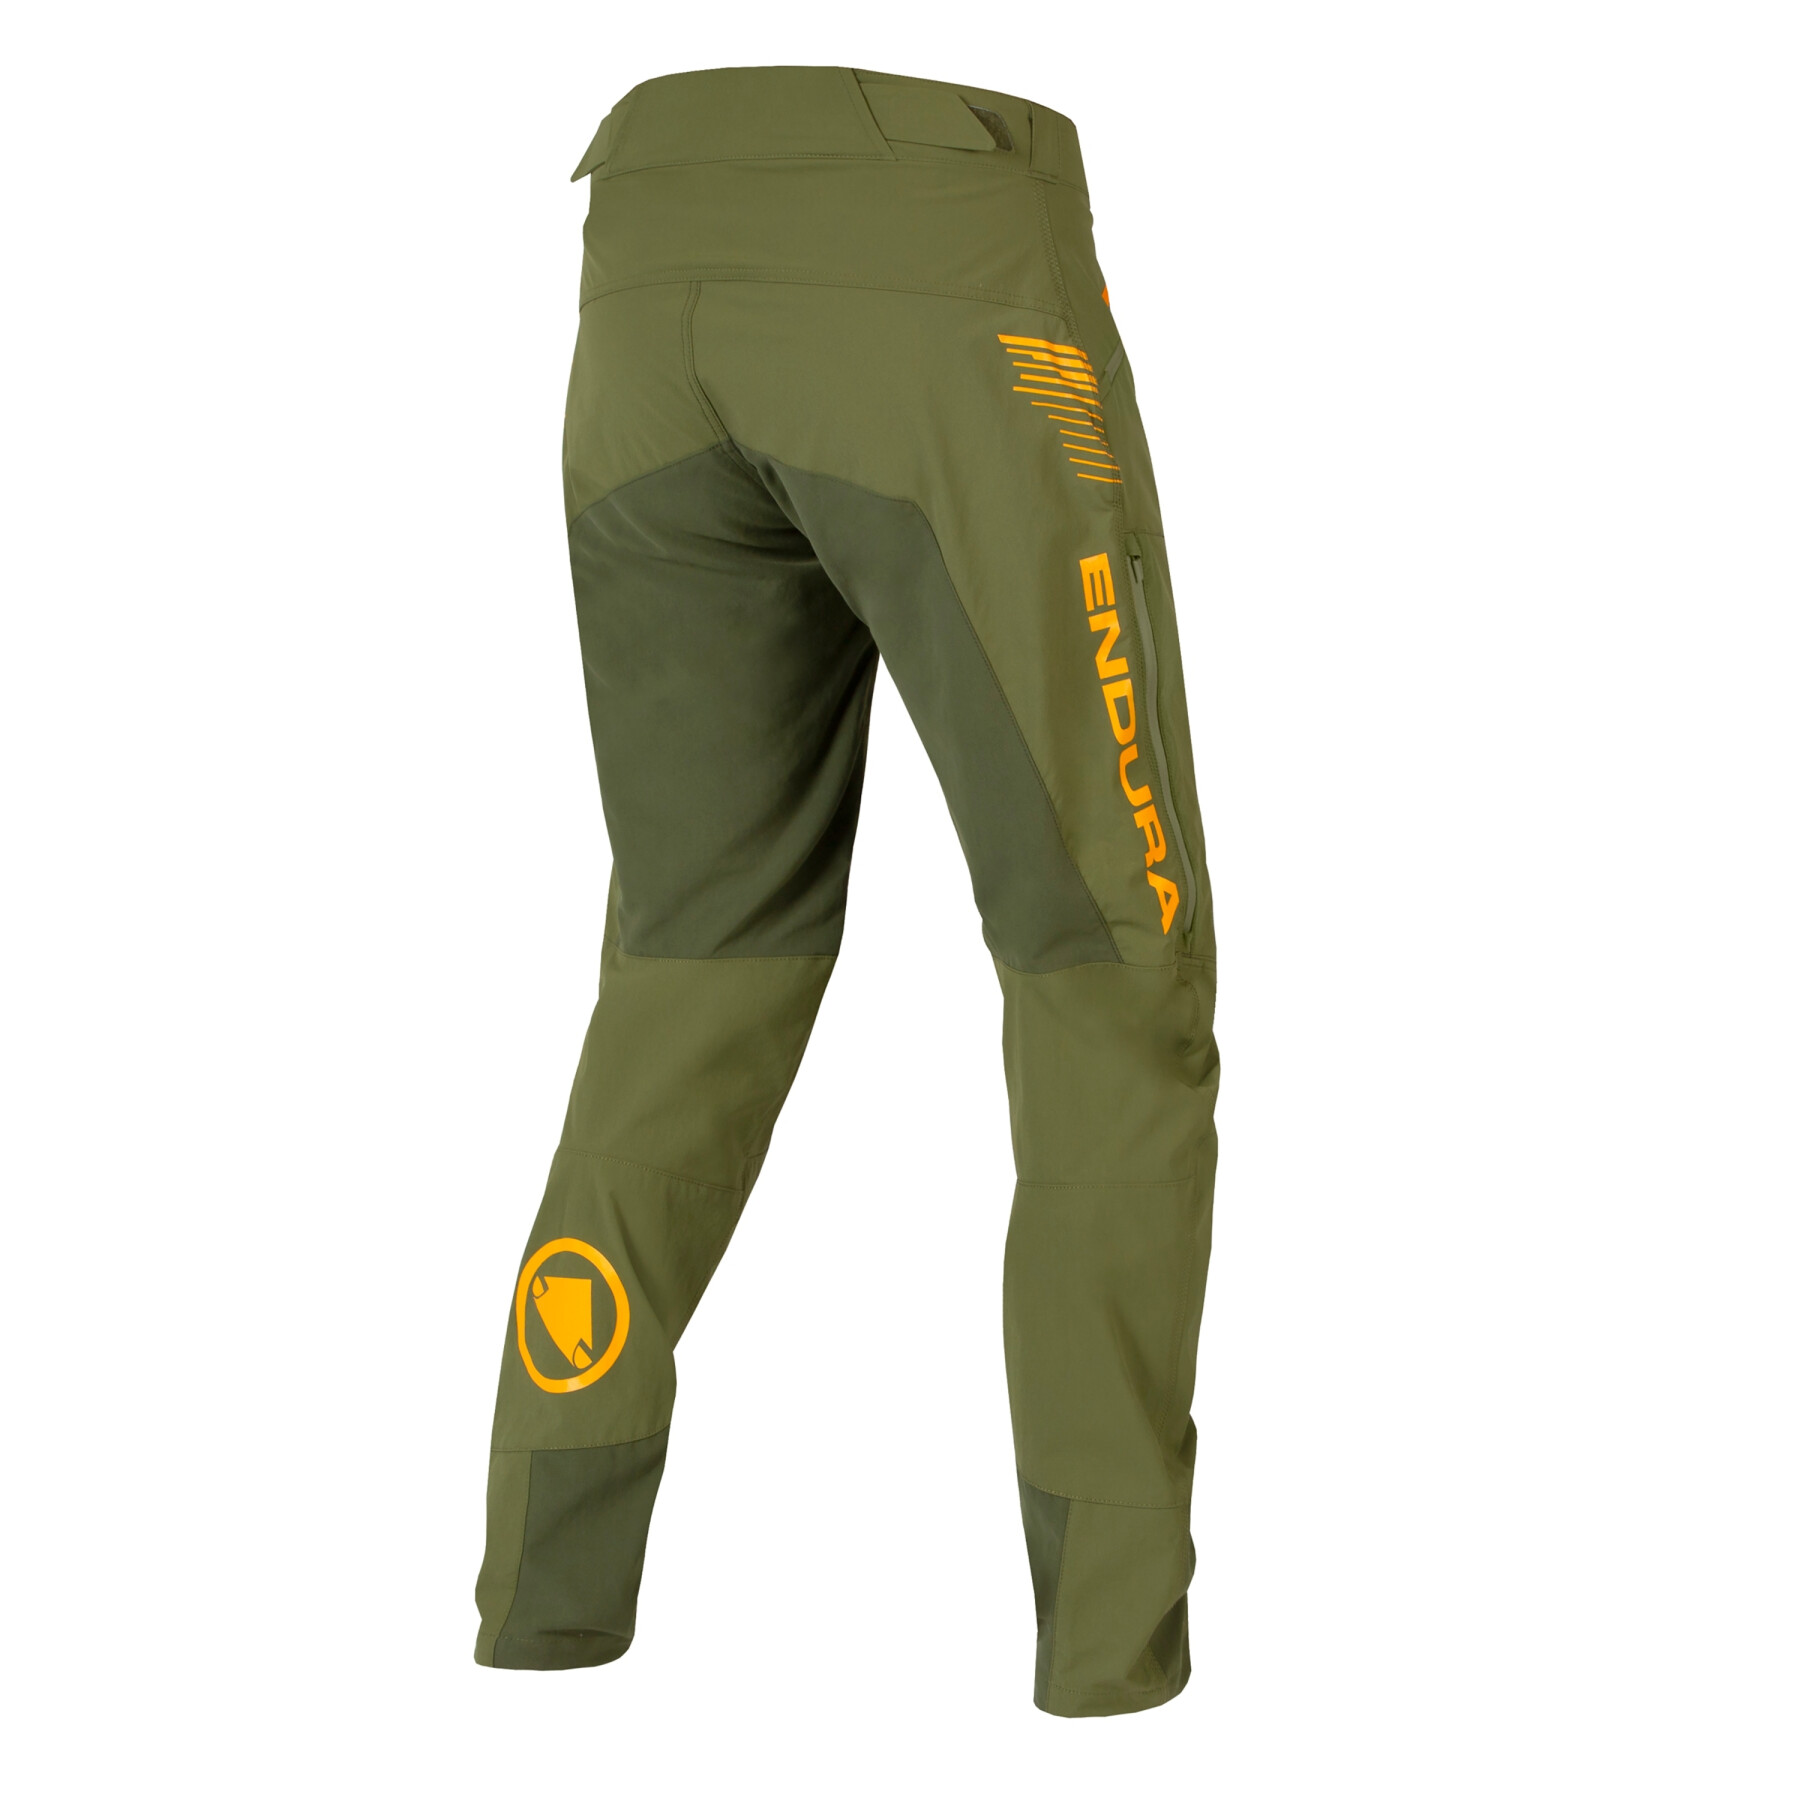 Protective pants Endura SingleTrack II